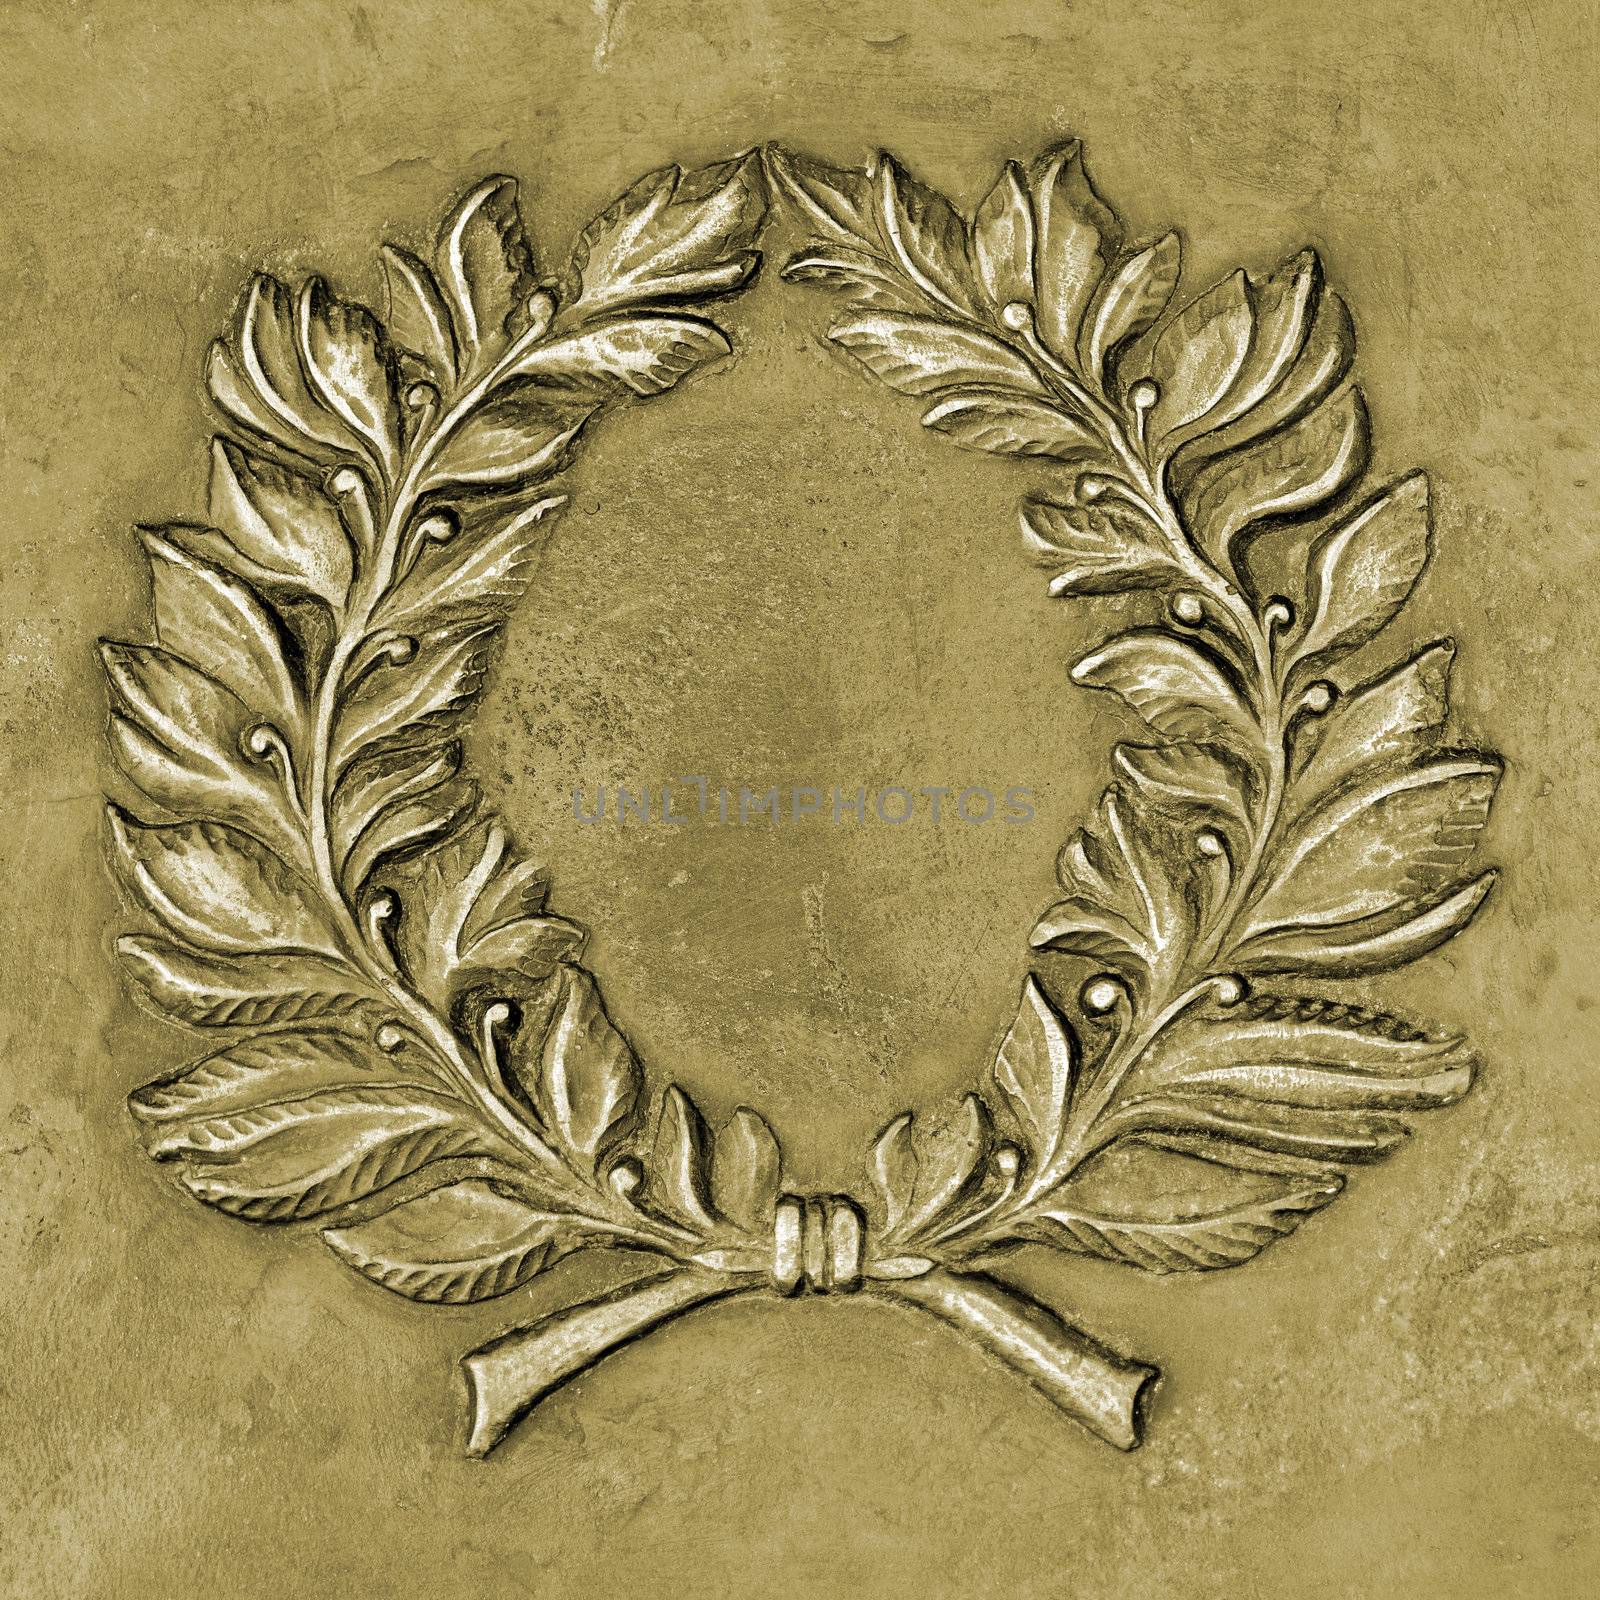 Bronze relief ornament by Vectorex